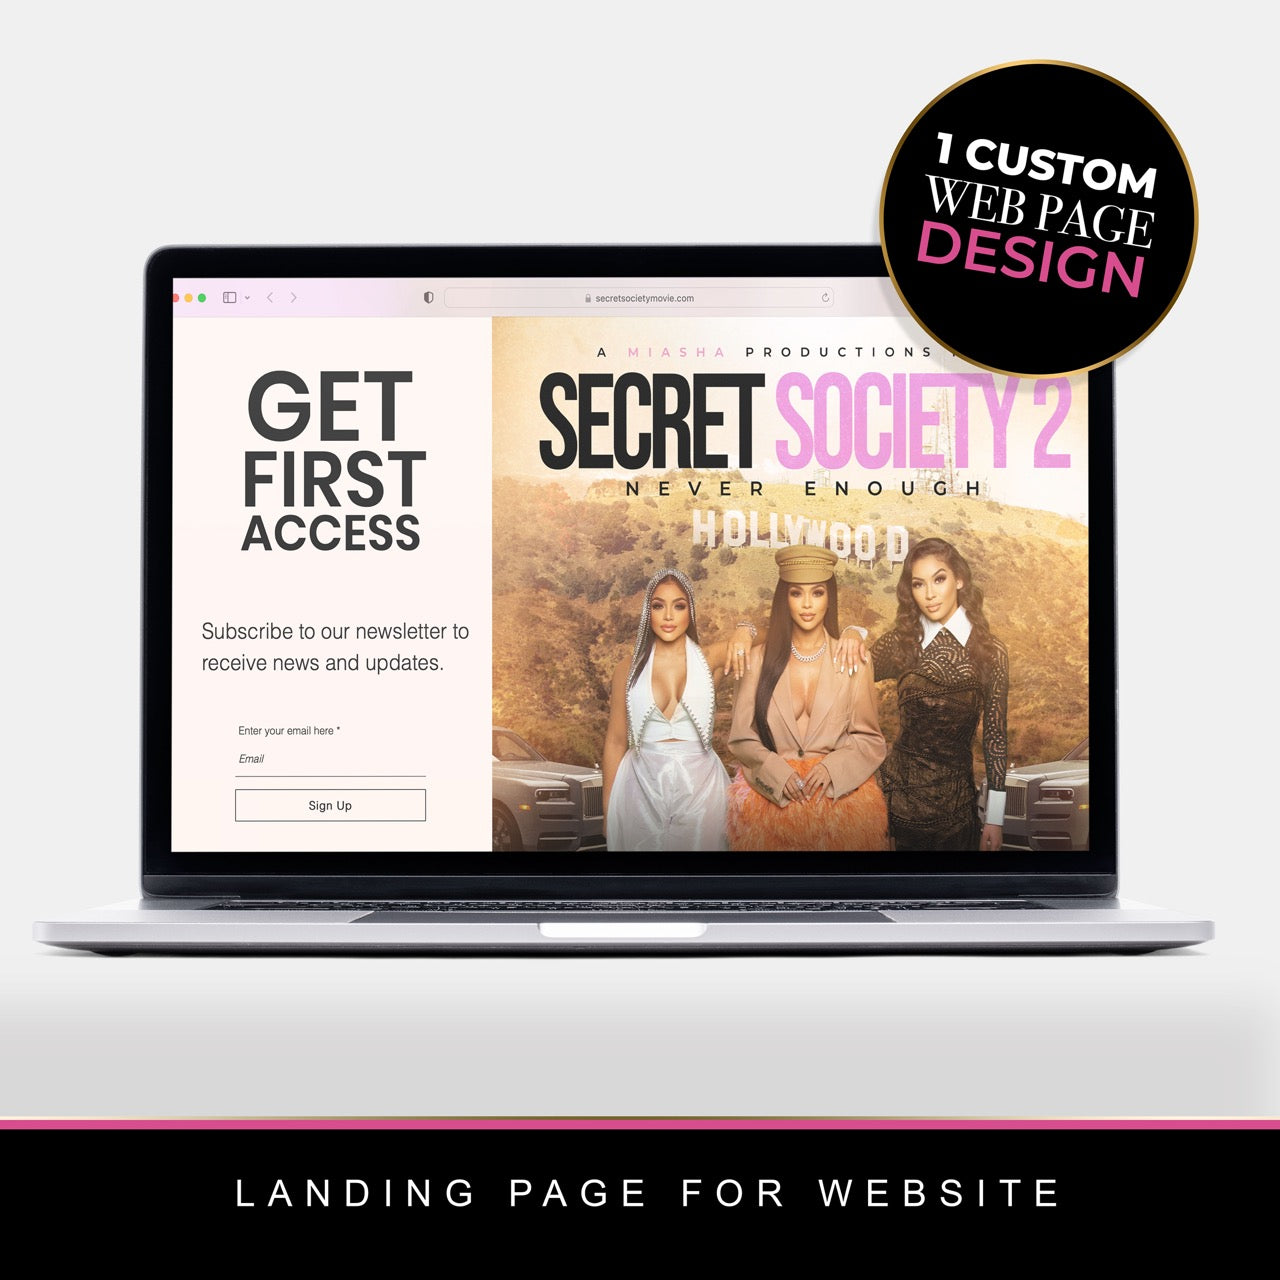 Landing Page for Websites